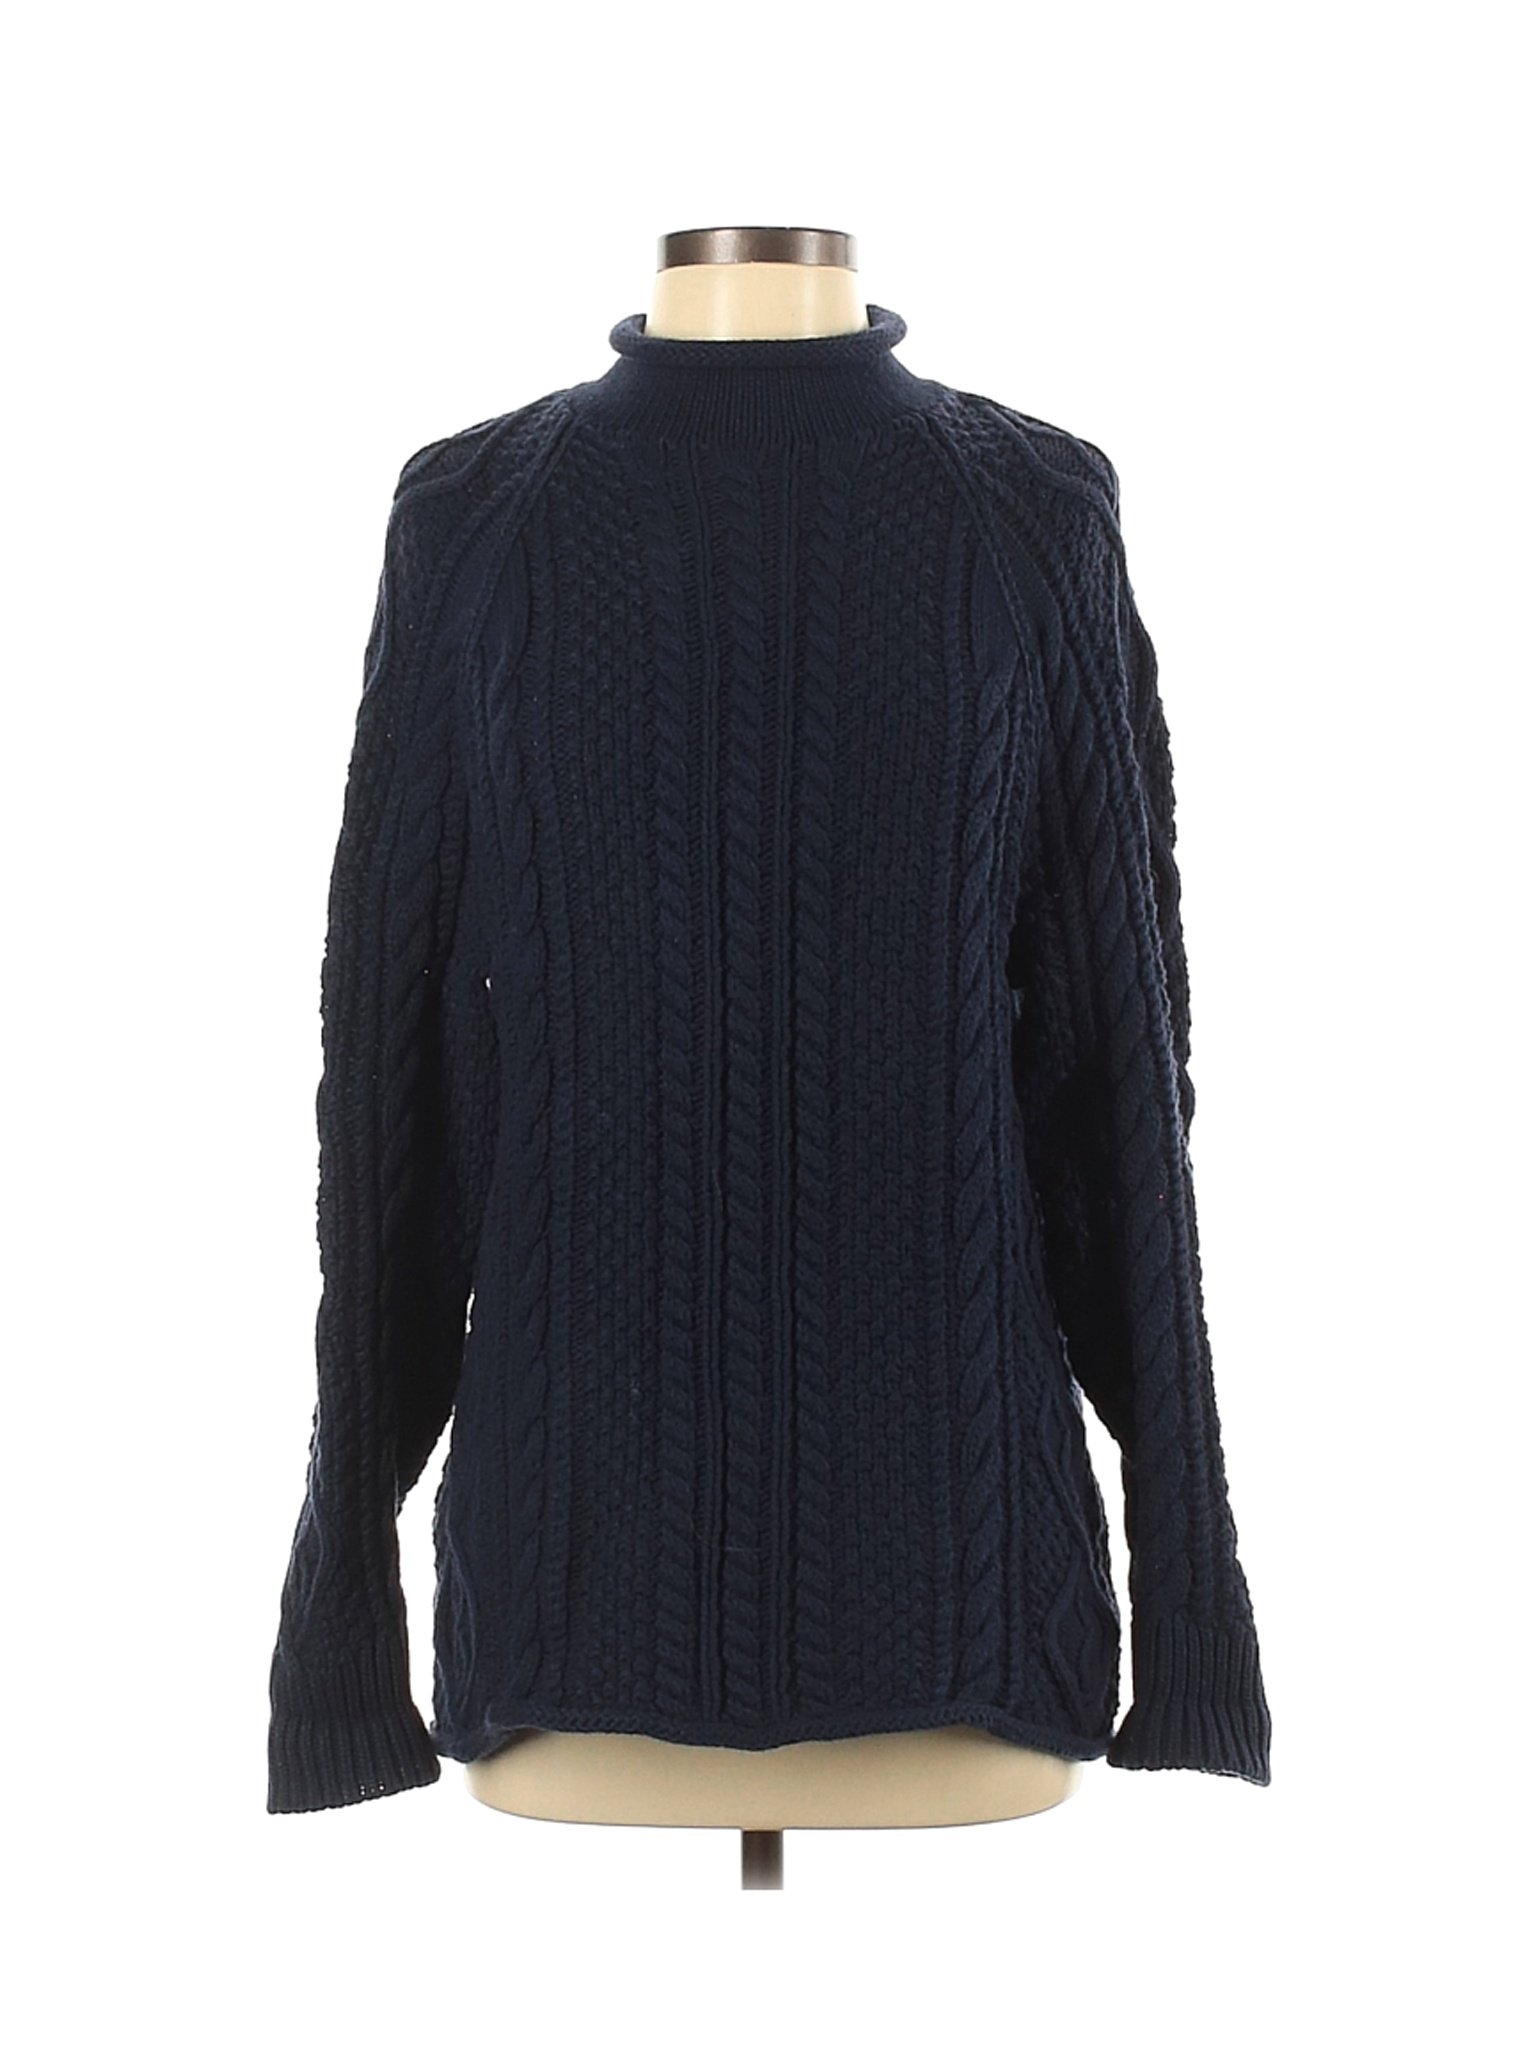 J.Crew Women Black Pullover Sweater XS | eBay